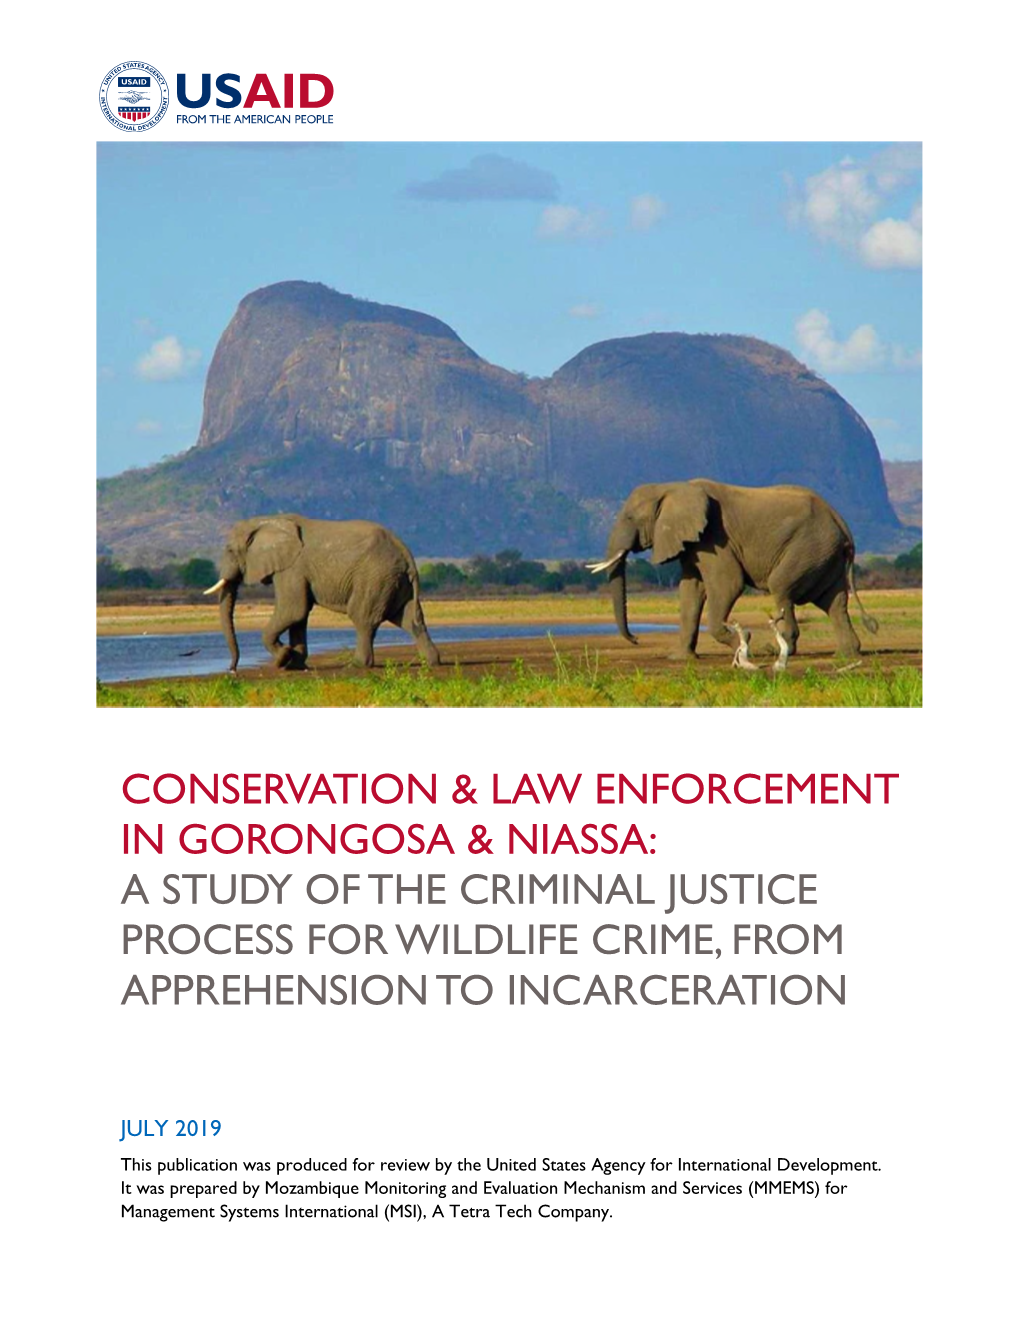 Conservation & Law Enforcement In